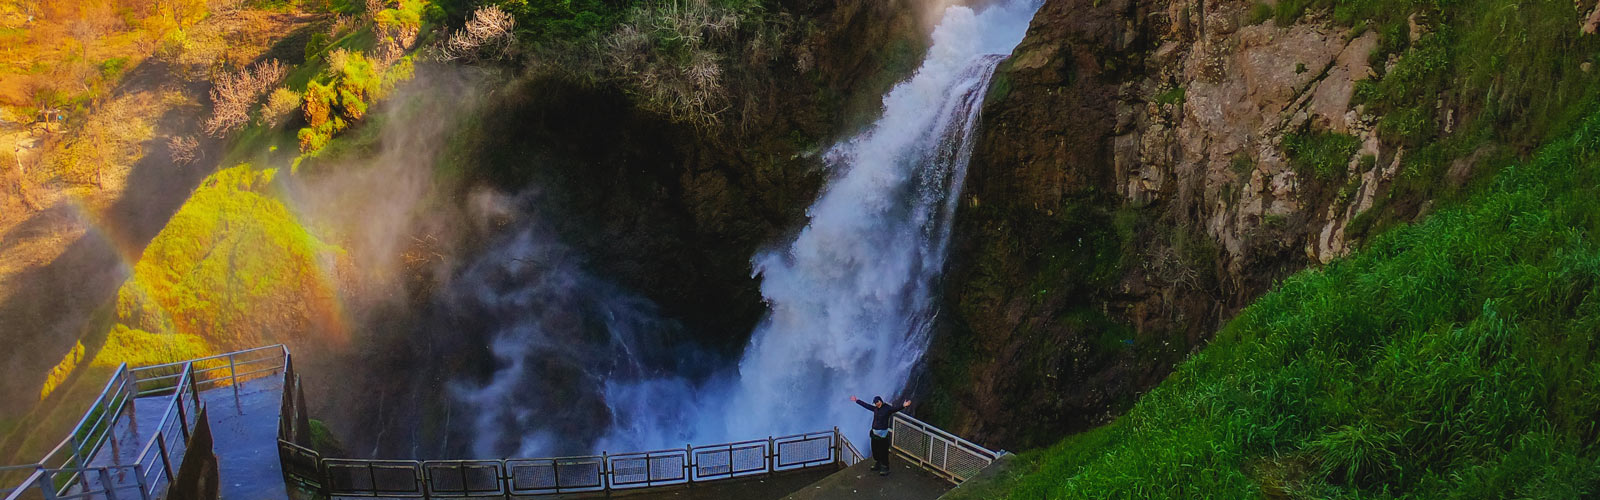 آبشار شلماش و چشمه گراوان